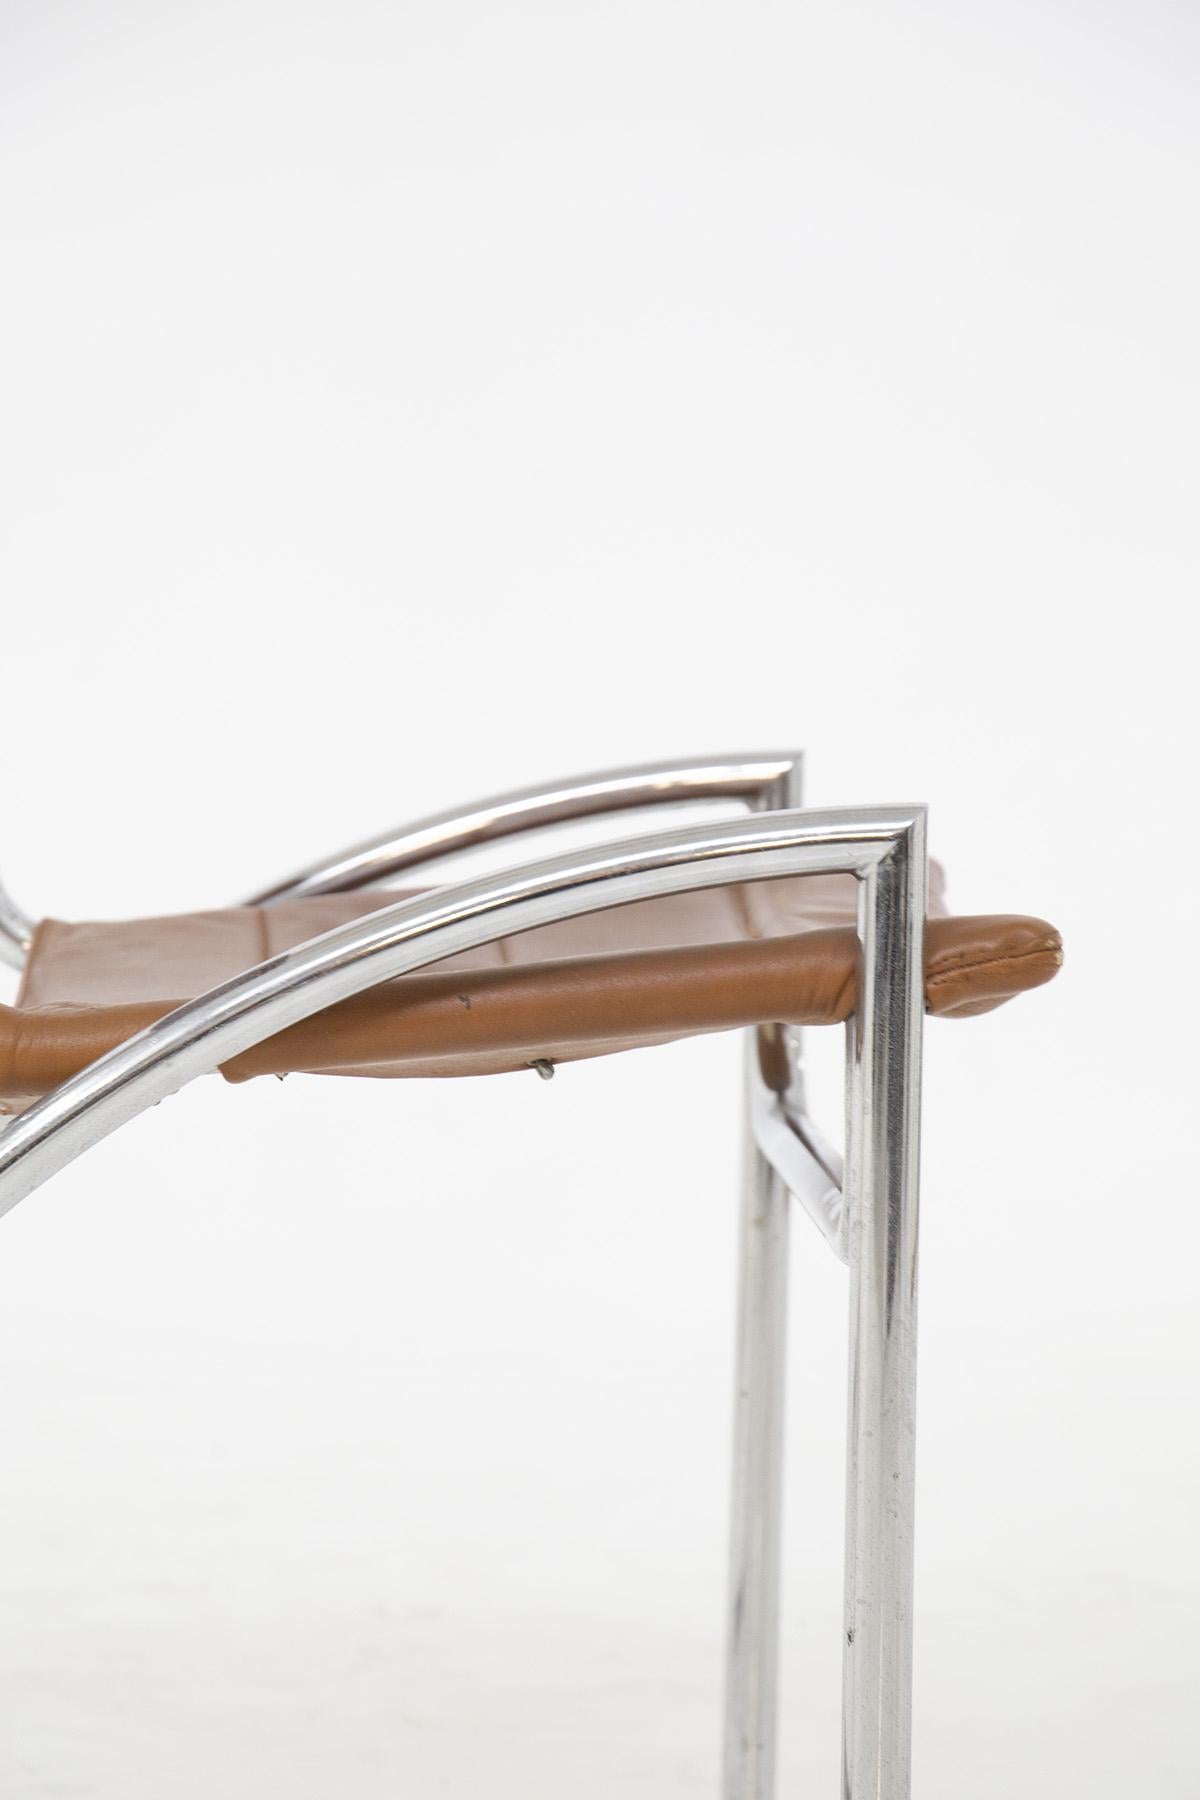 Gae Aulenti Chairs by Elam Model Lira Set of Four, Published 3